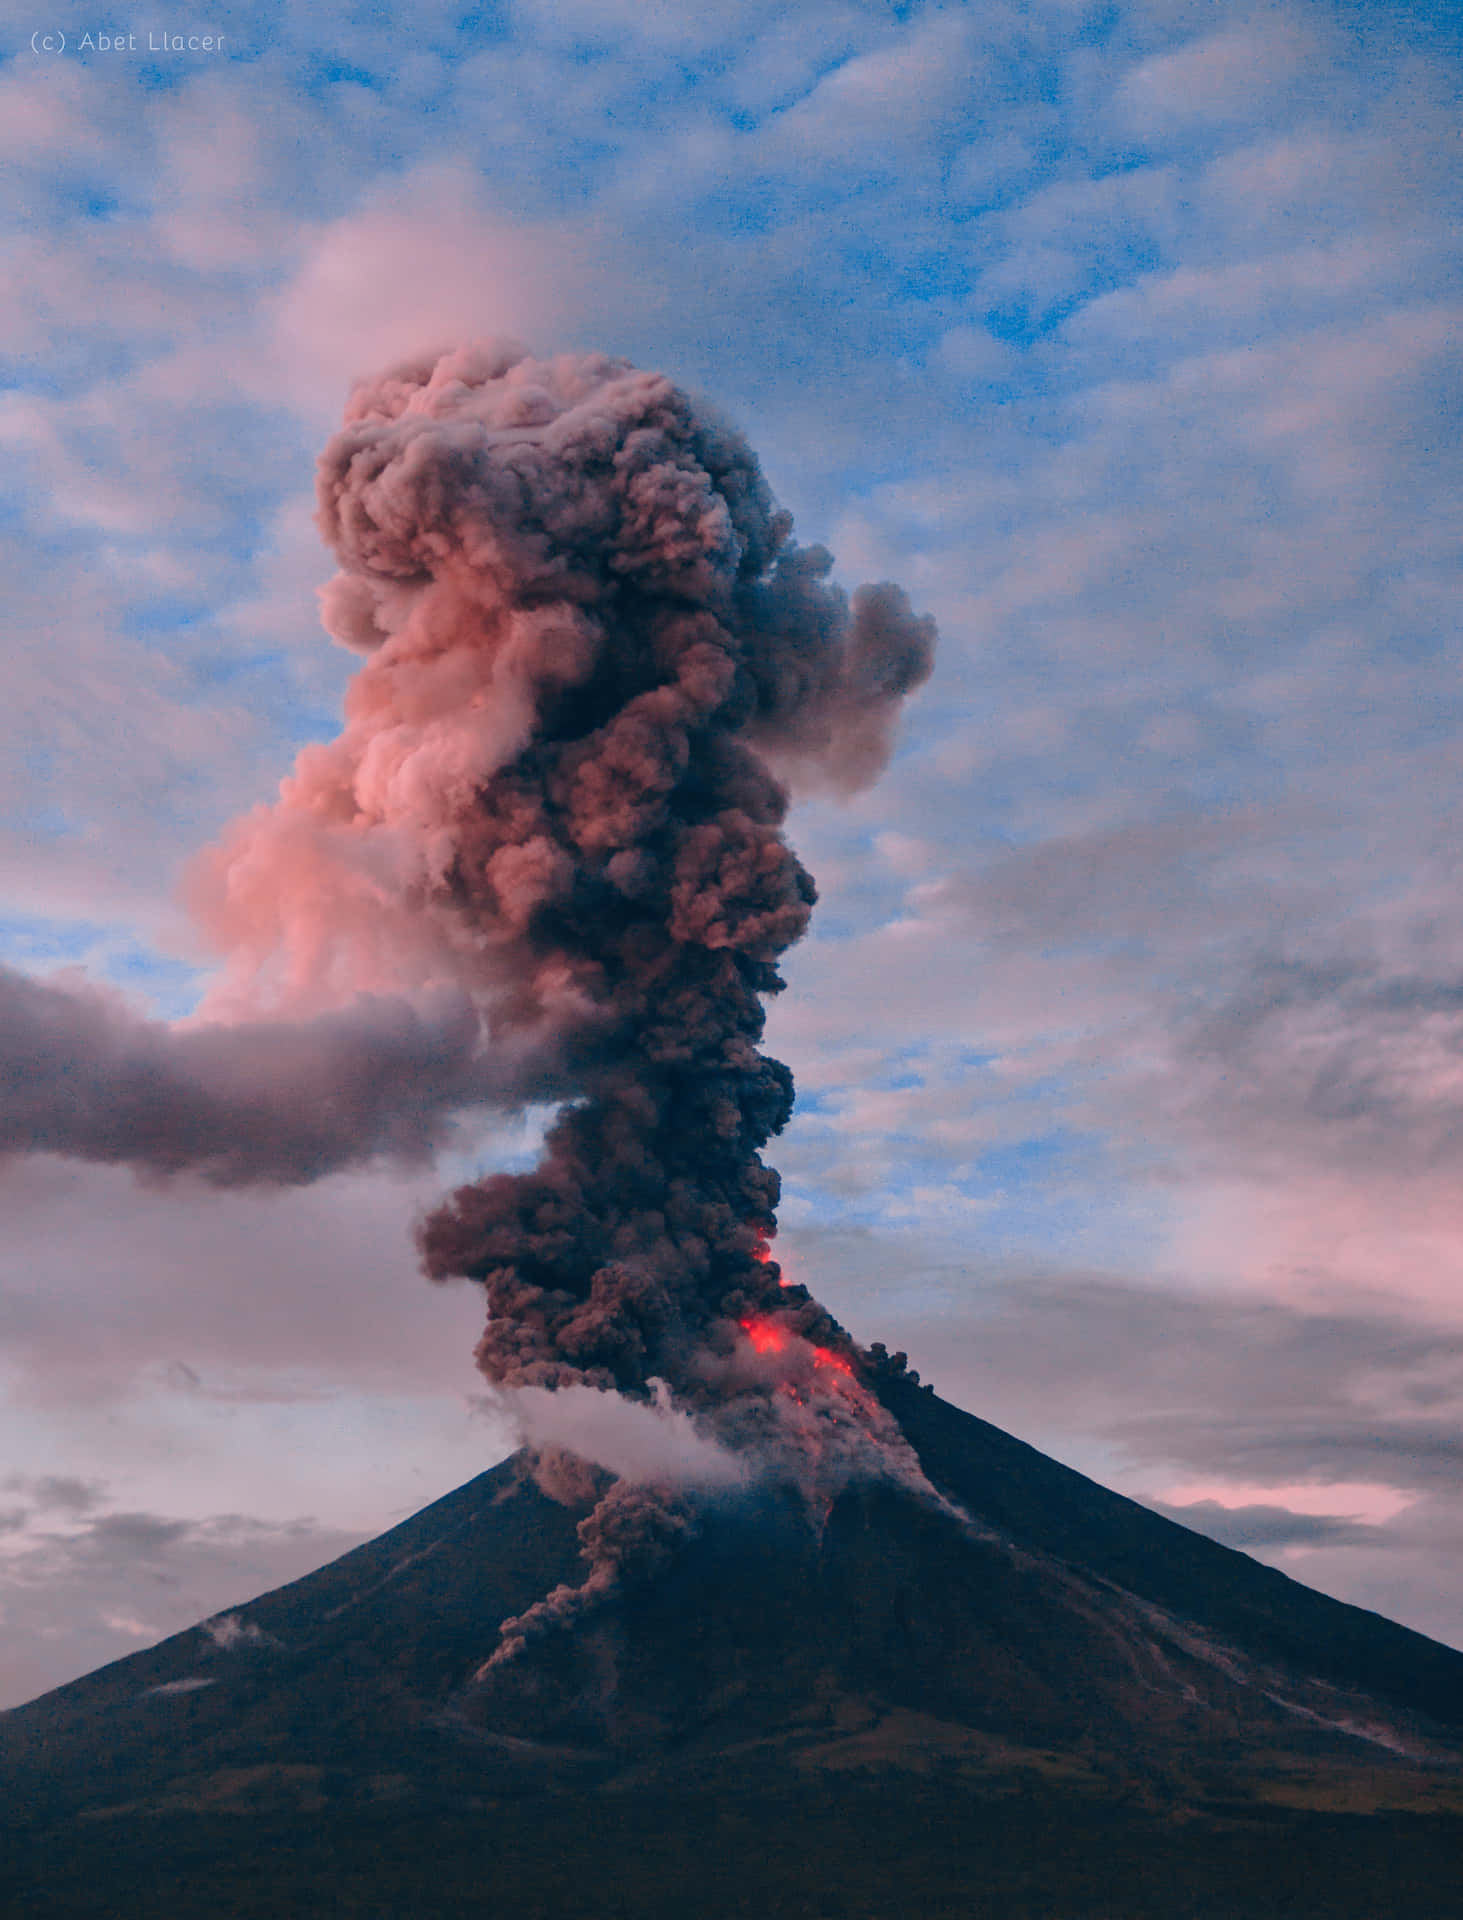 A blazing orange sunrise over a steaming volcano